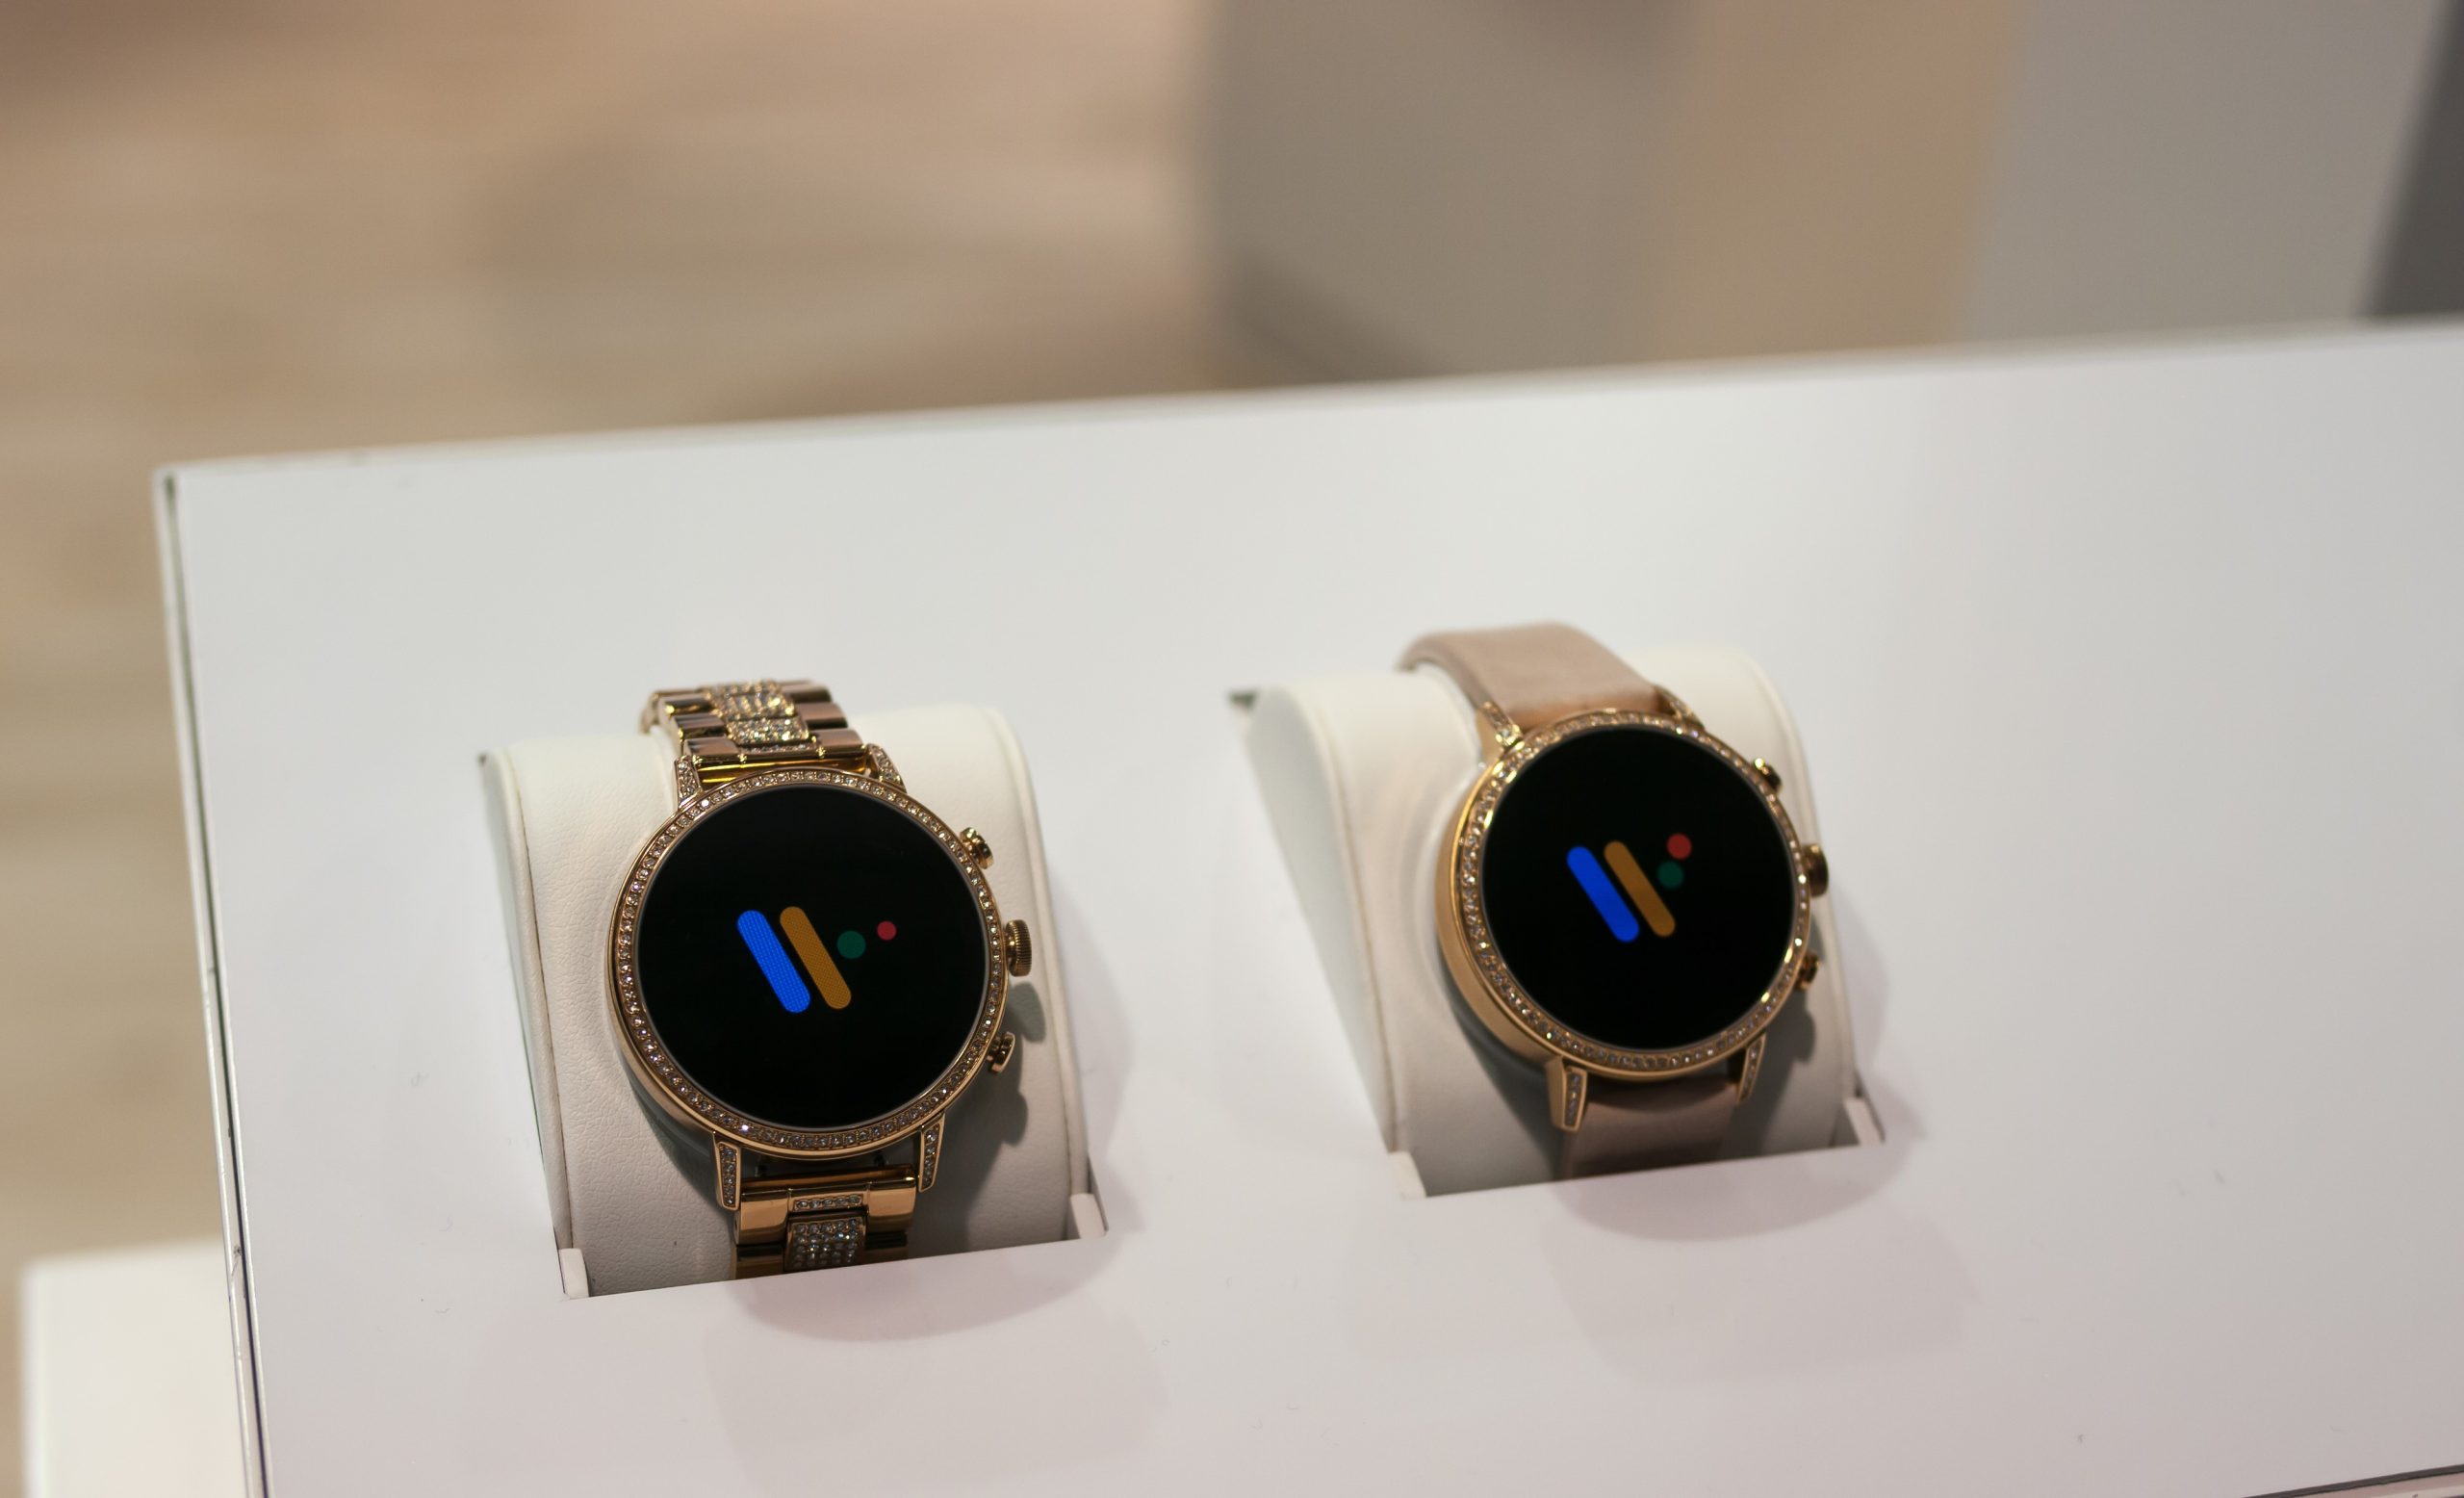 Designed smartwatch